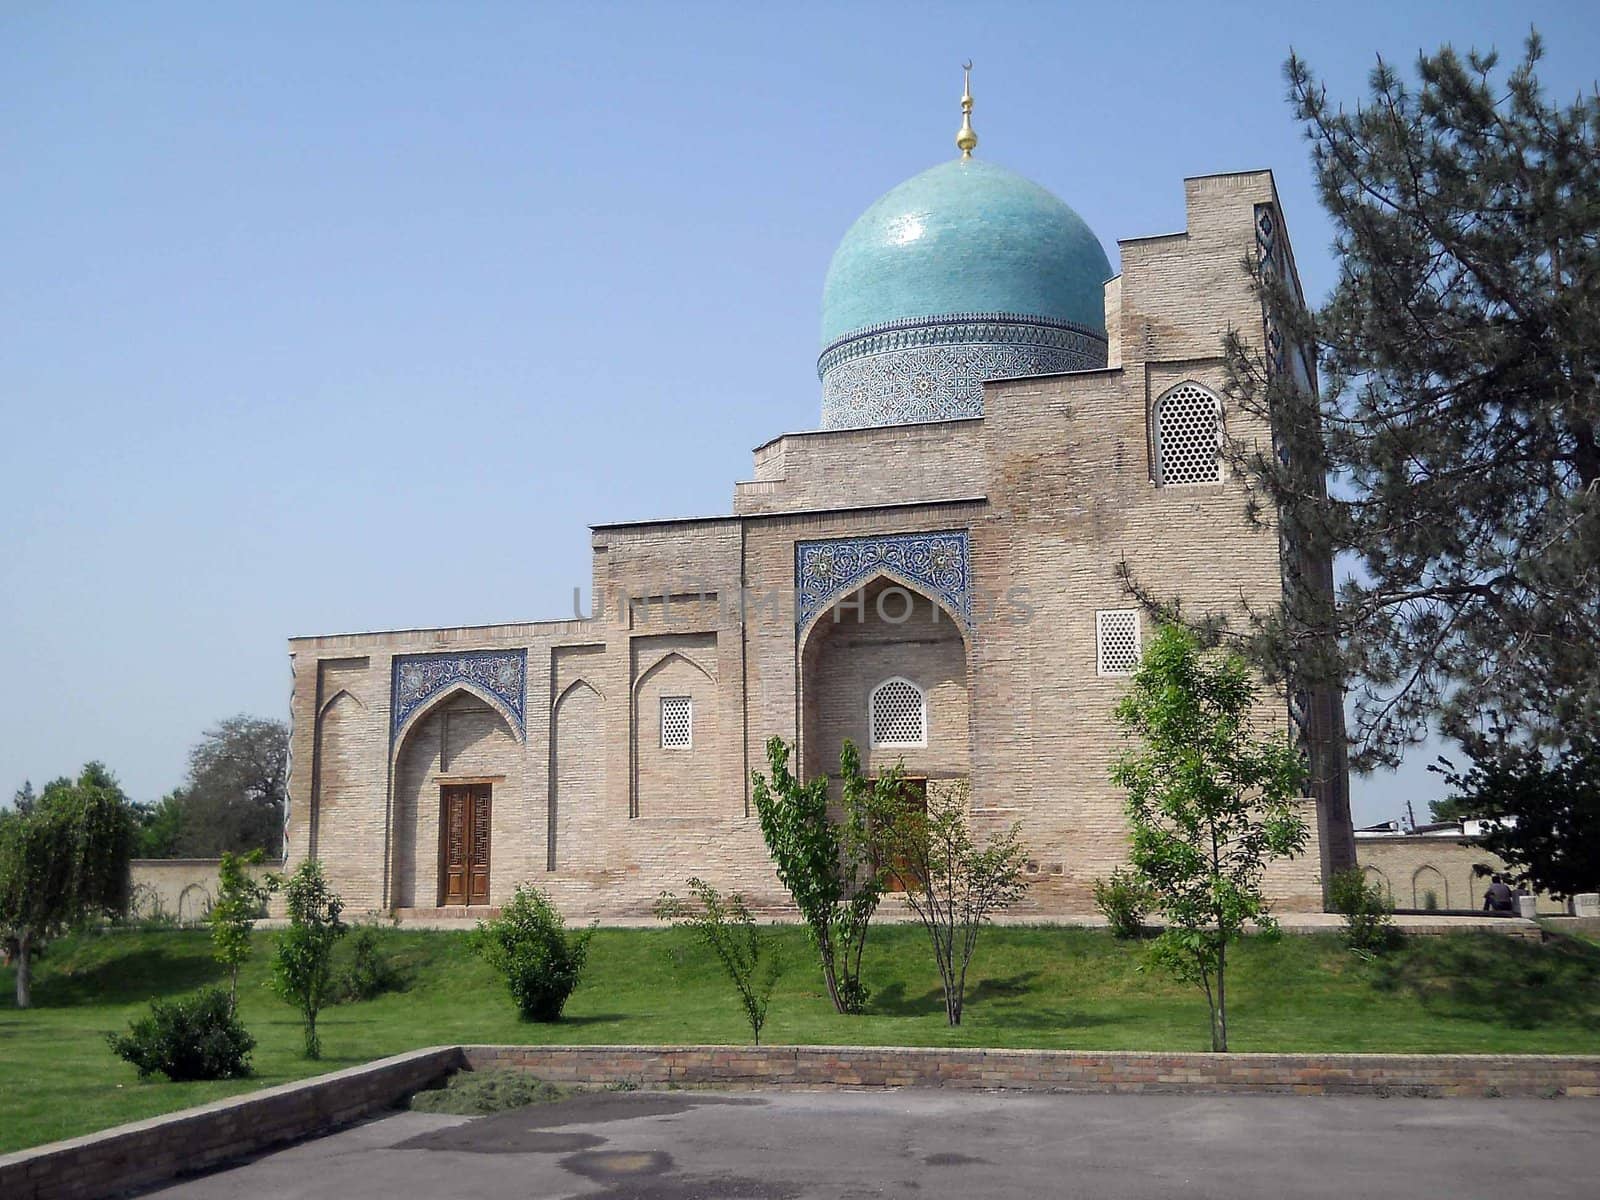 Tashkent 2 by georg777